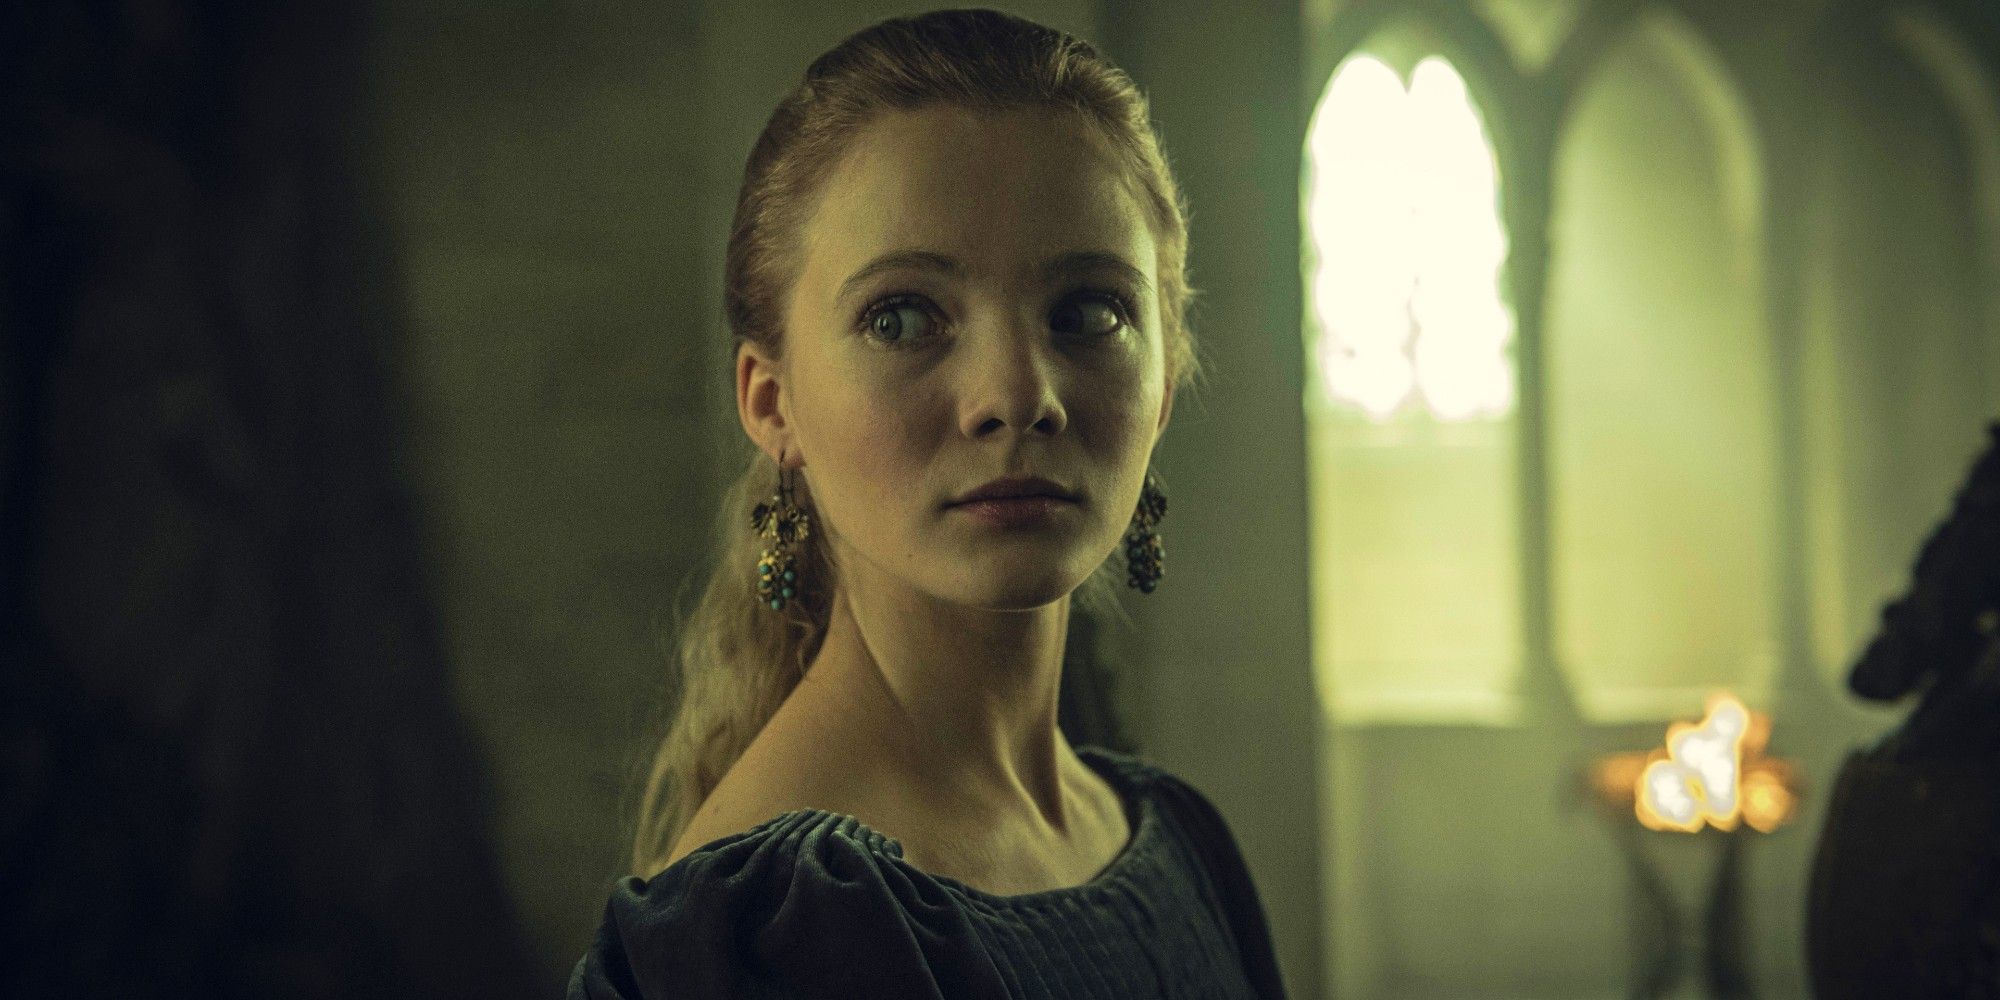 Freya Allan as Ciri looking worried in The Witcher